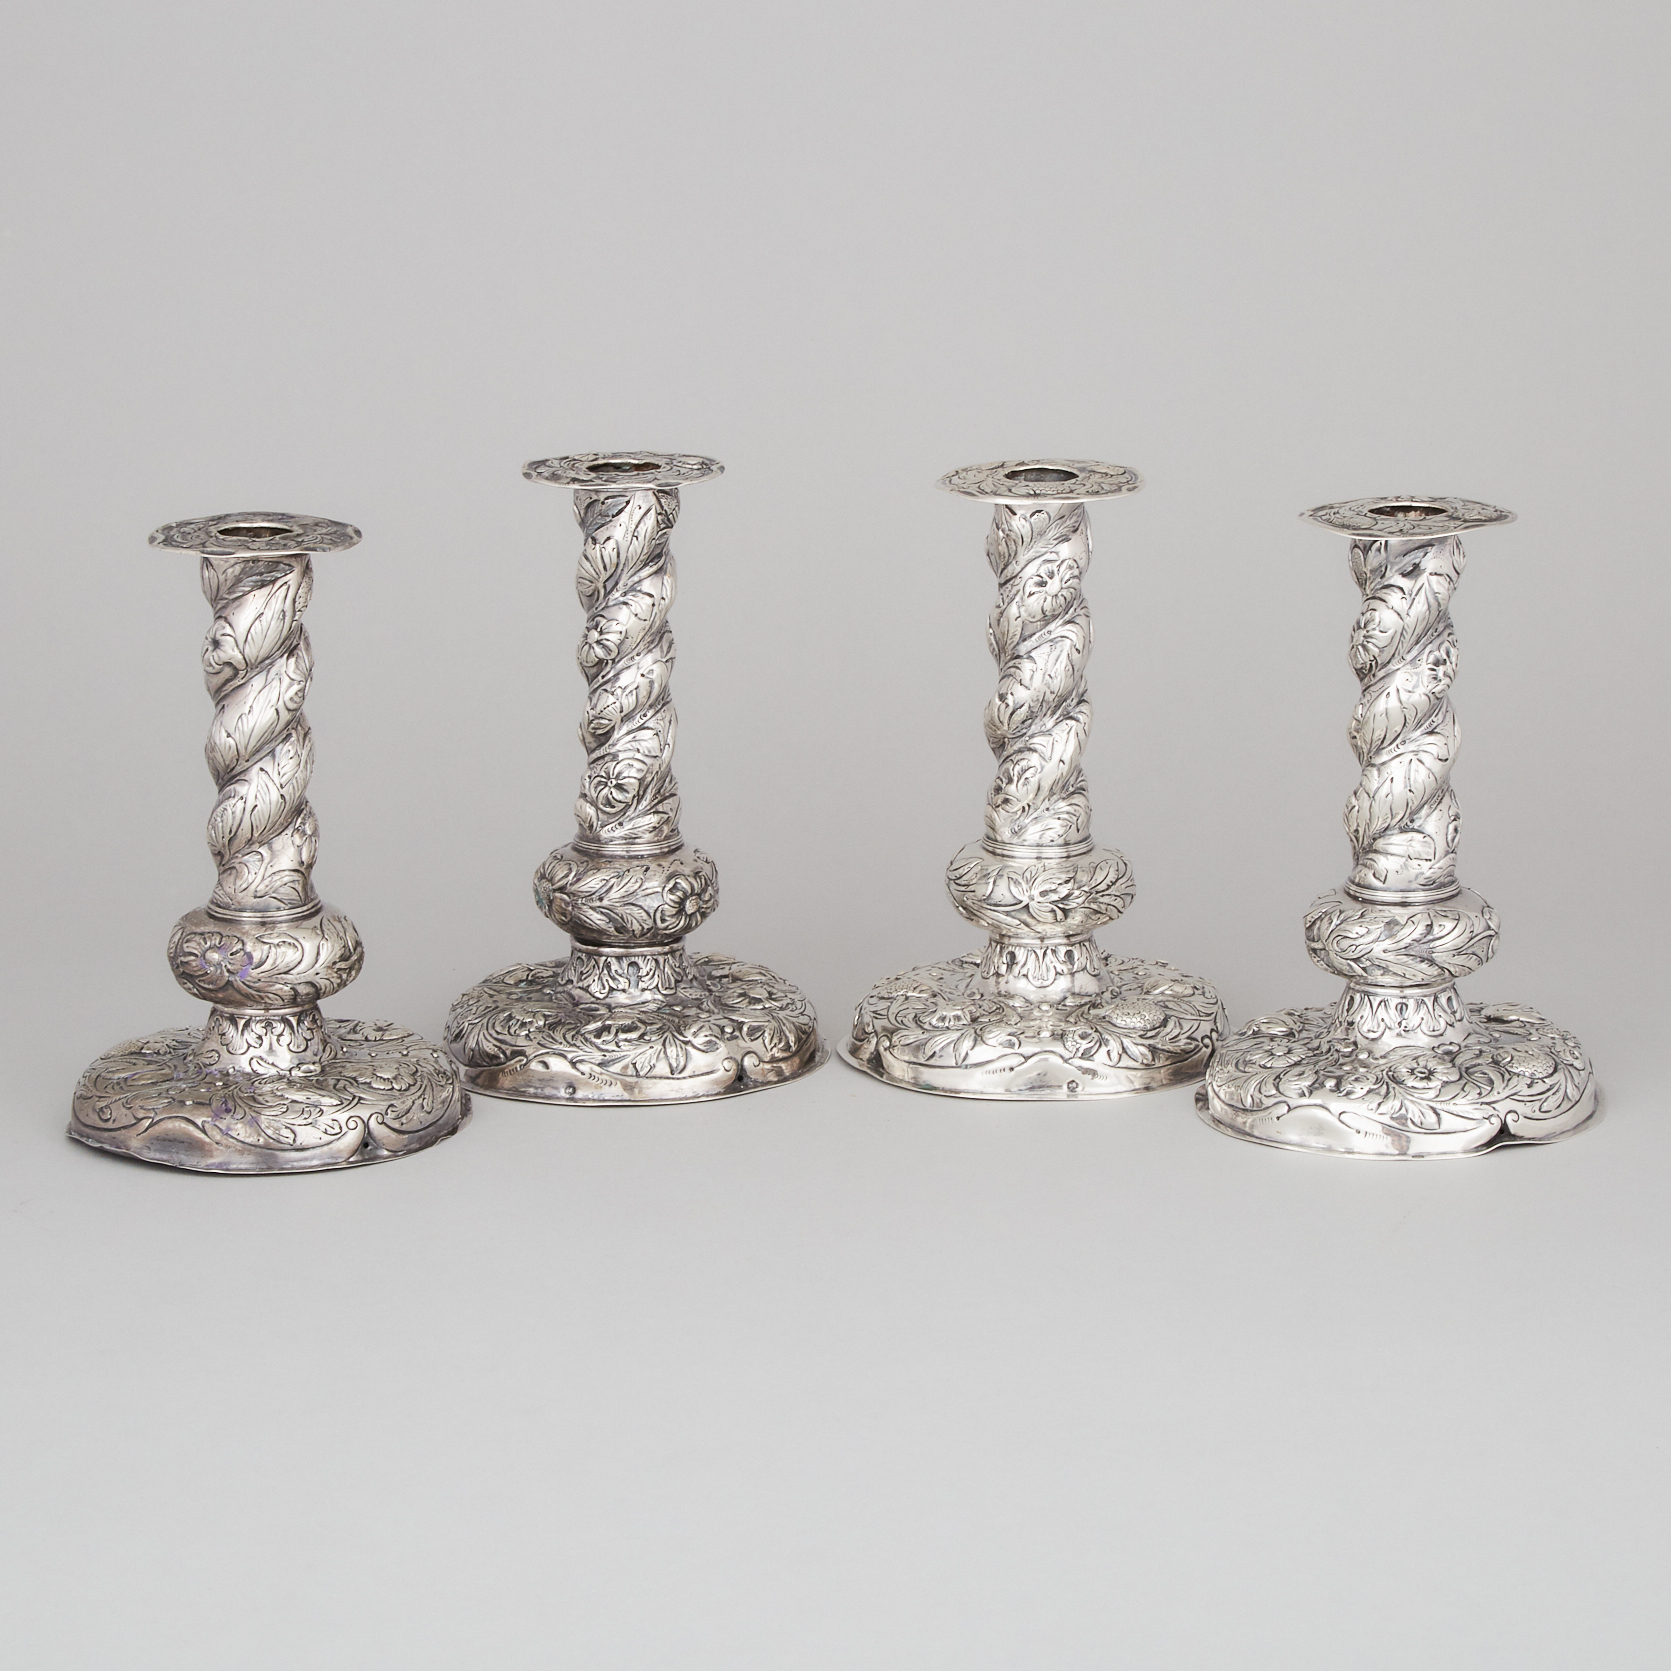 Set of Four Dutch Silver Table Candlesticks, The Hague, c.1902-06